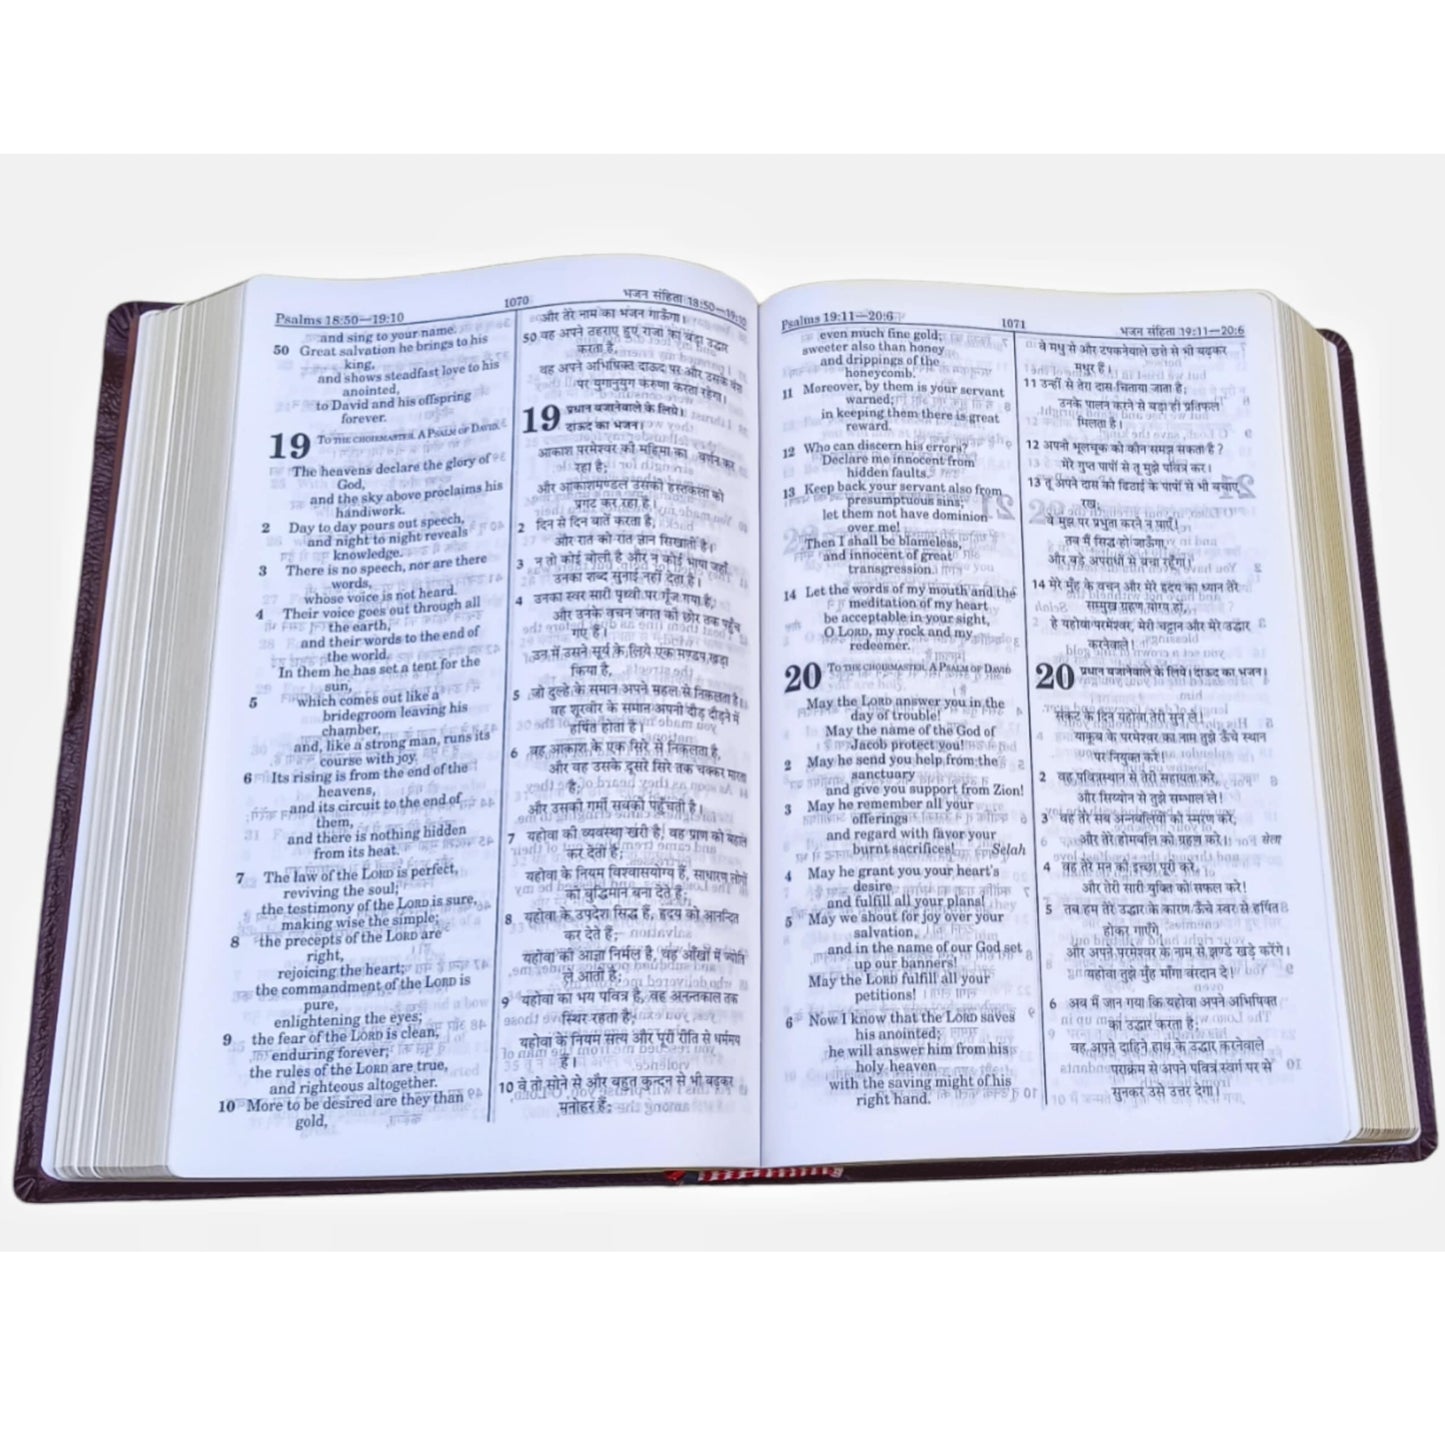 English Hindi Diglot Bible in Leather Bond